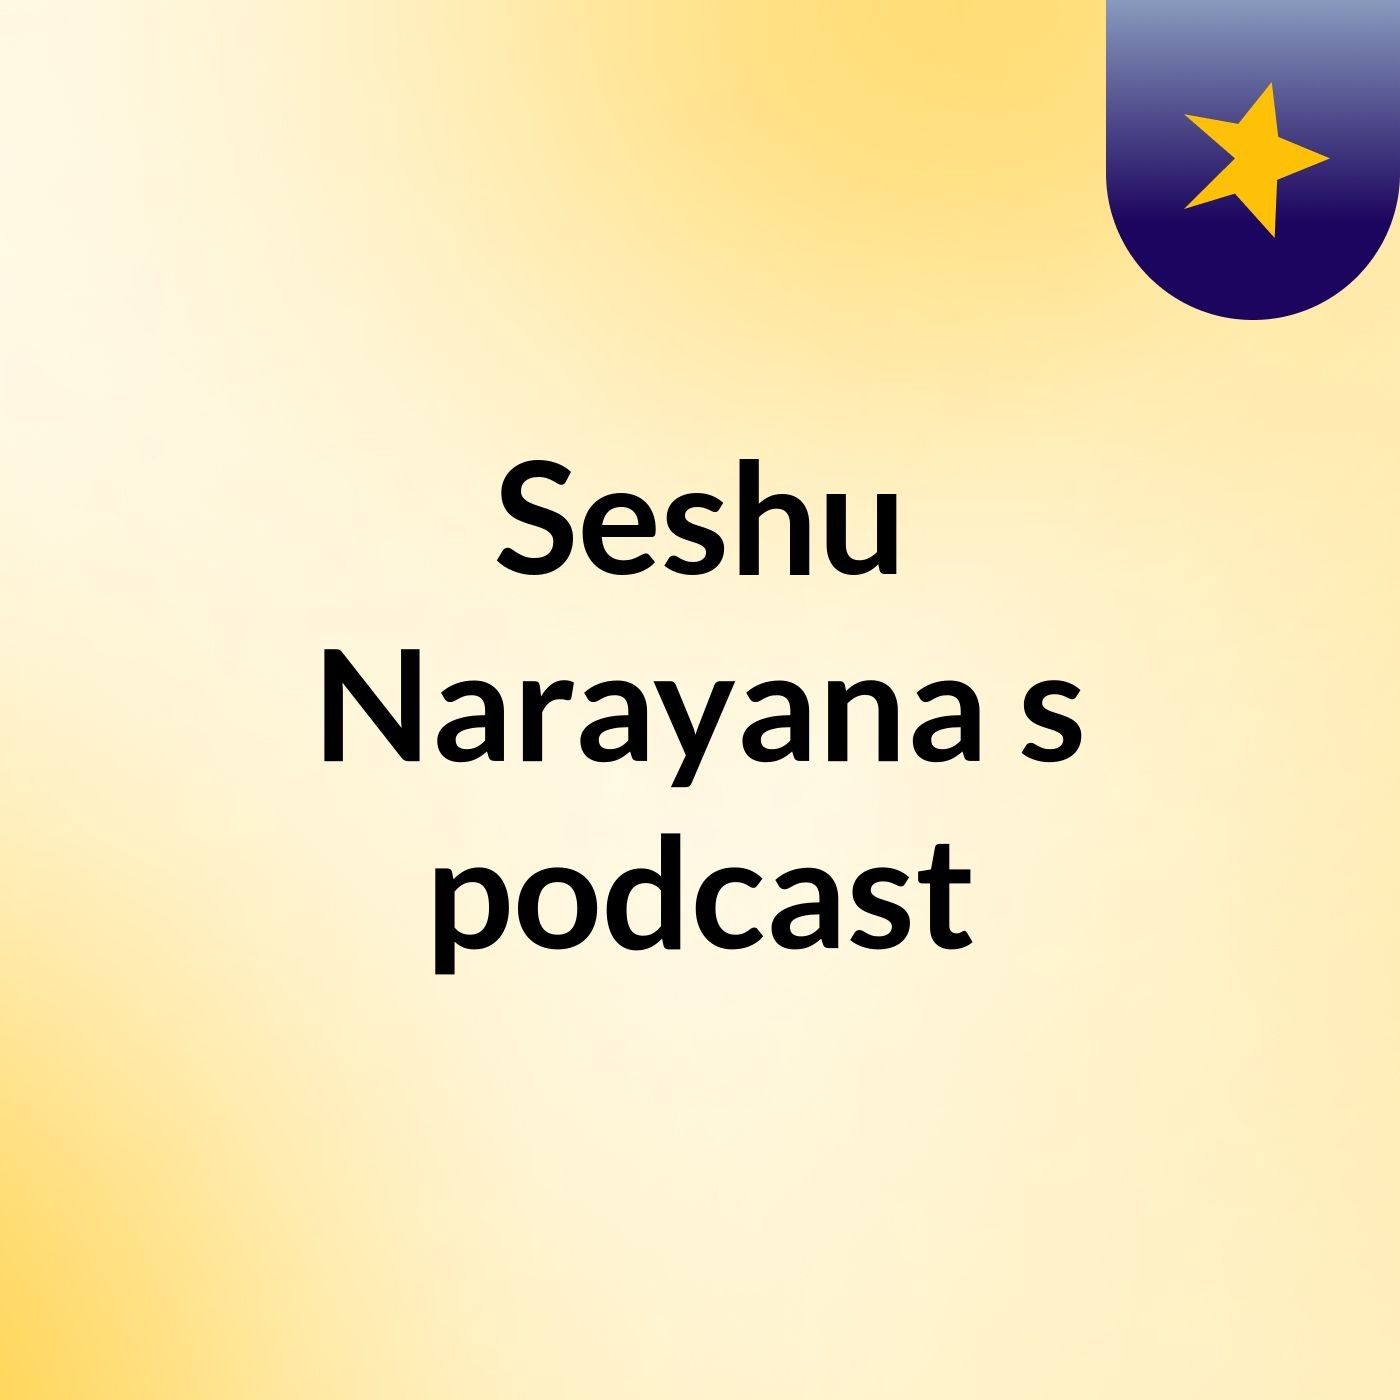 Episode 3 - Seshu Narayana's podcast